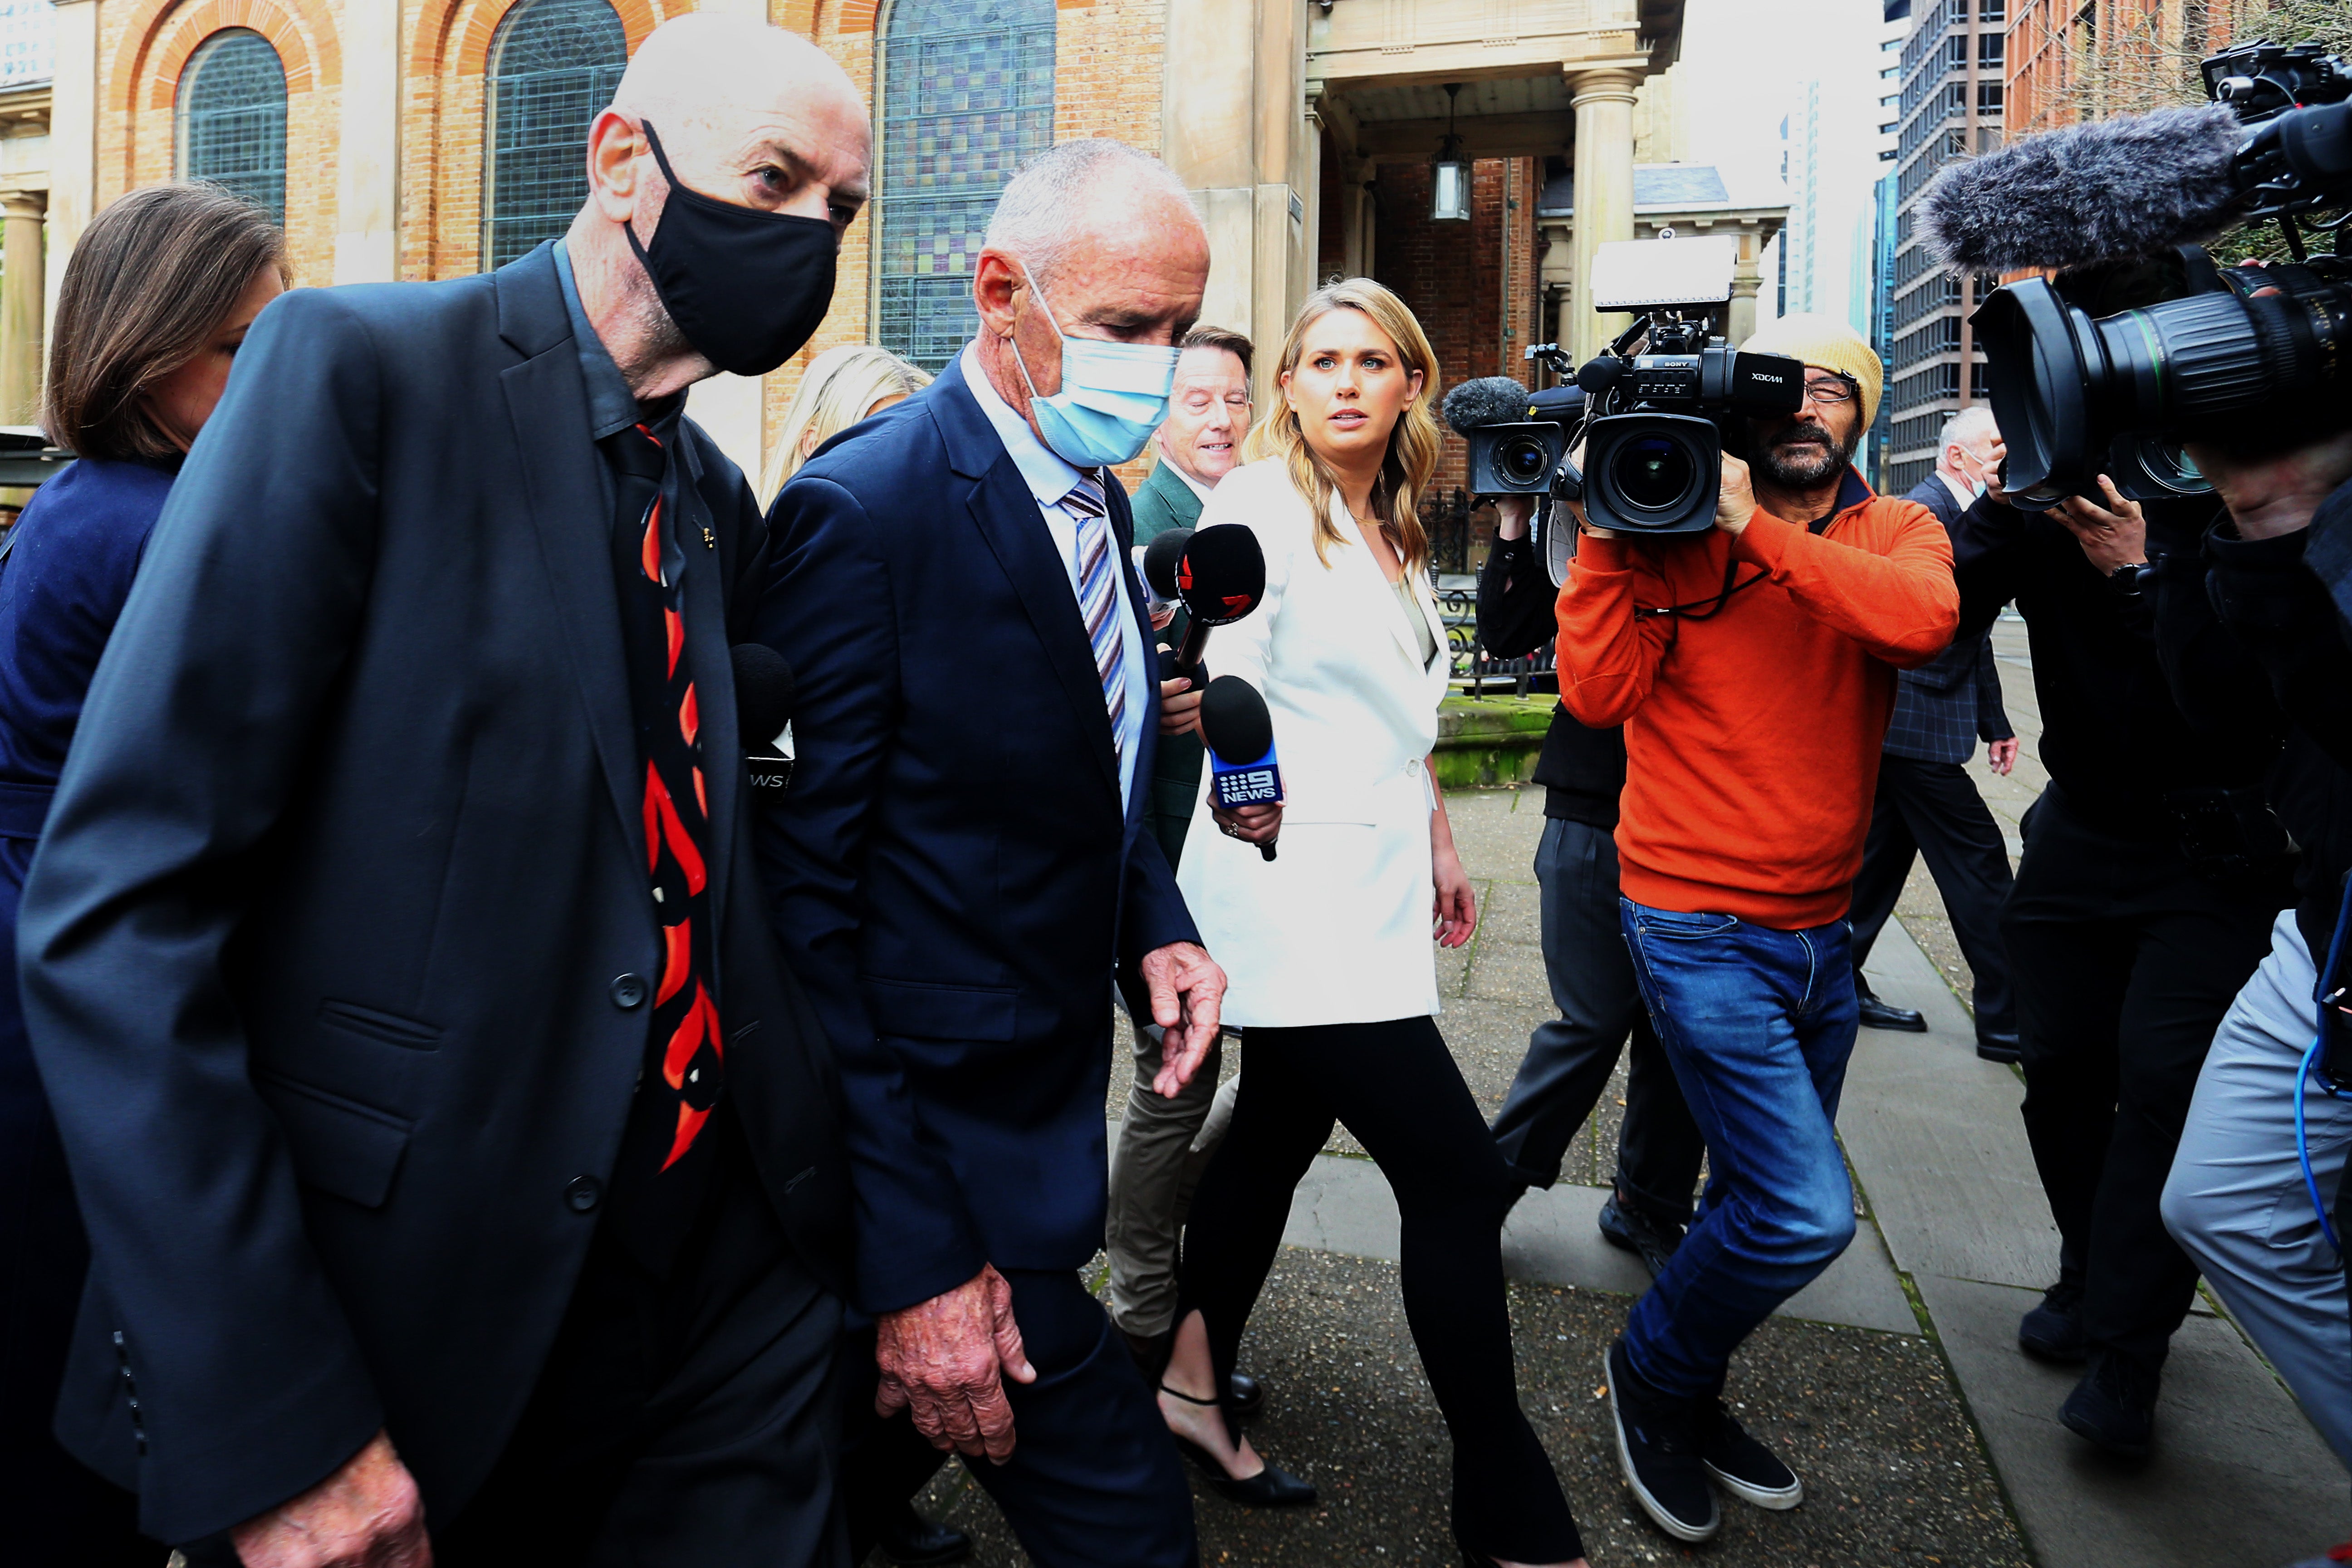 Chris Dawson and team arrive at NSW Supreme Court in Sydney, Australia